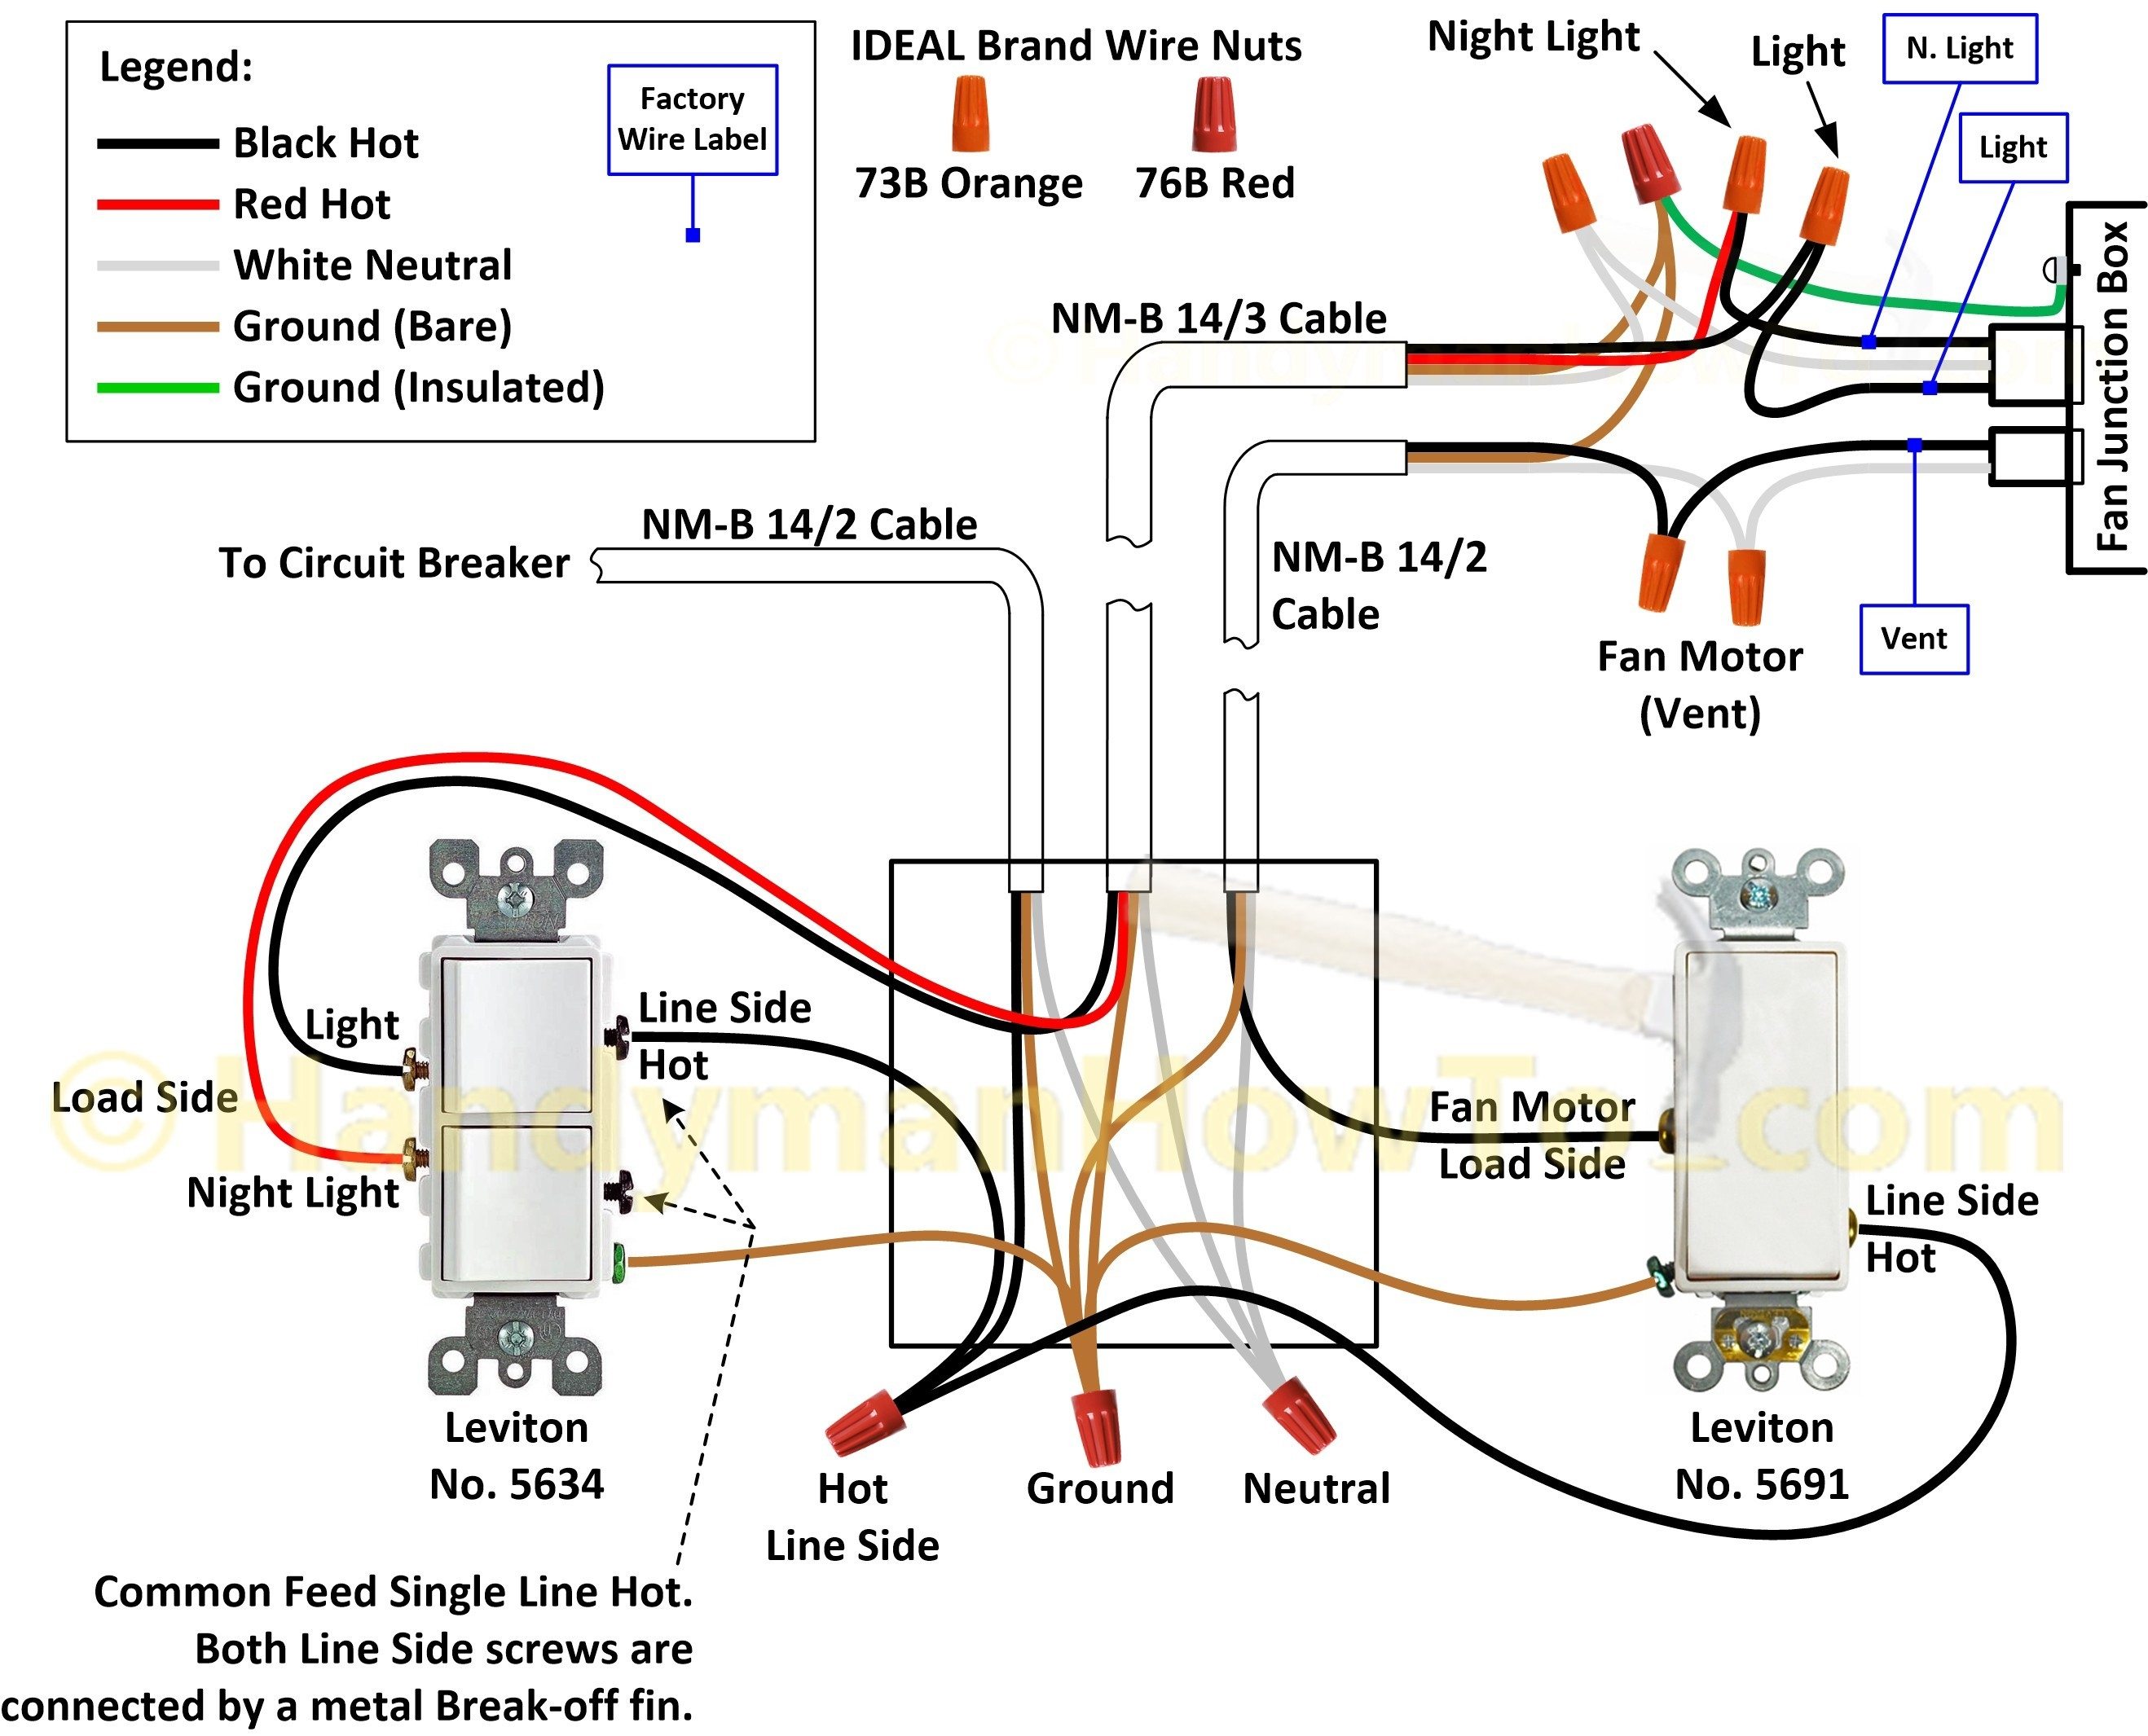 Recessed Wiring Diagram | Wiring Diagram - Recessed Lighting Wiring Diagram